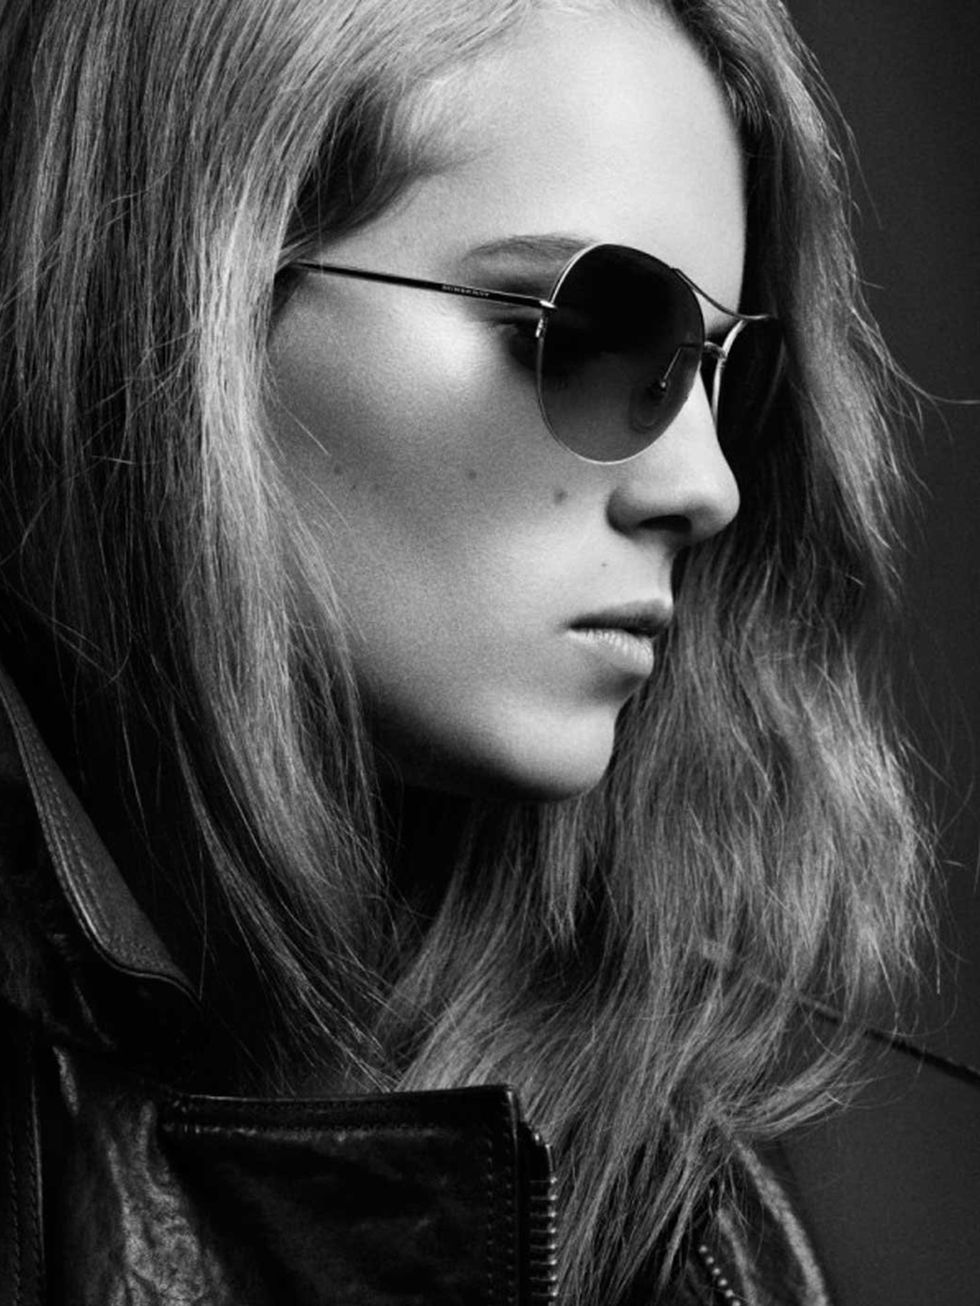 <p>Musician Marika Hackman in the Burberry eyewear campaign</p>